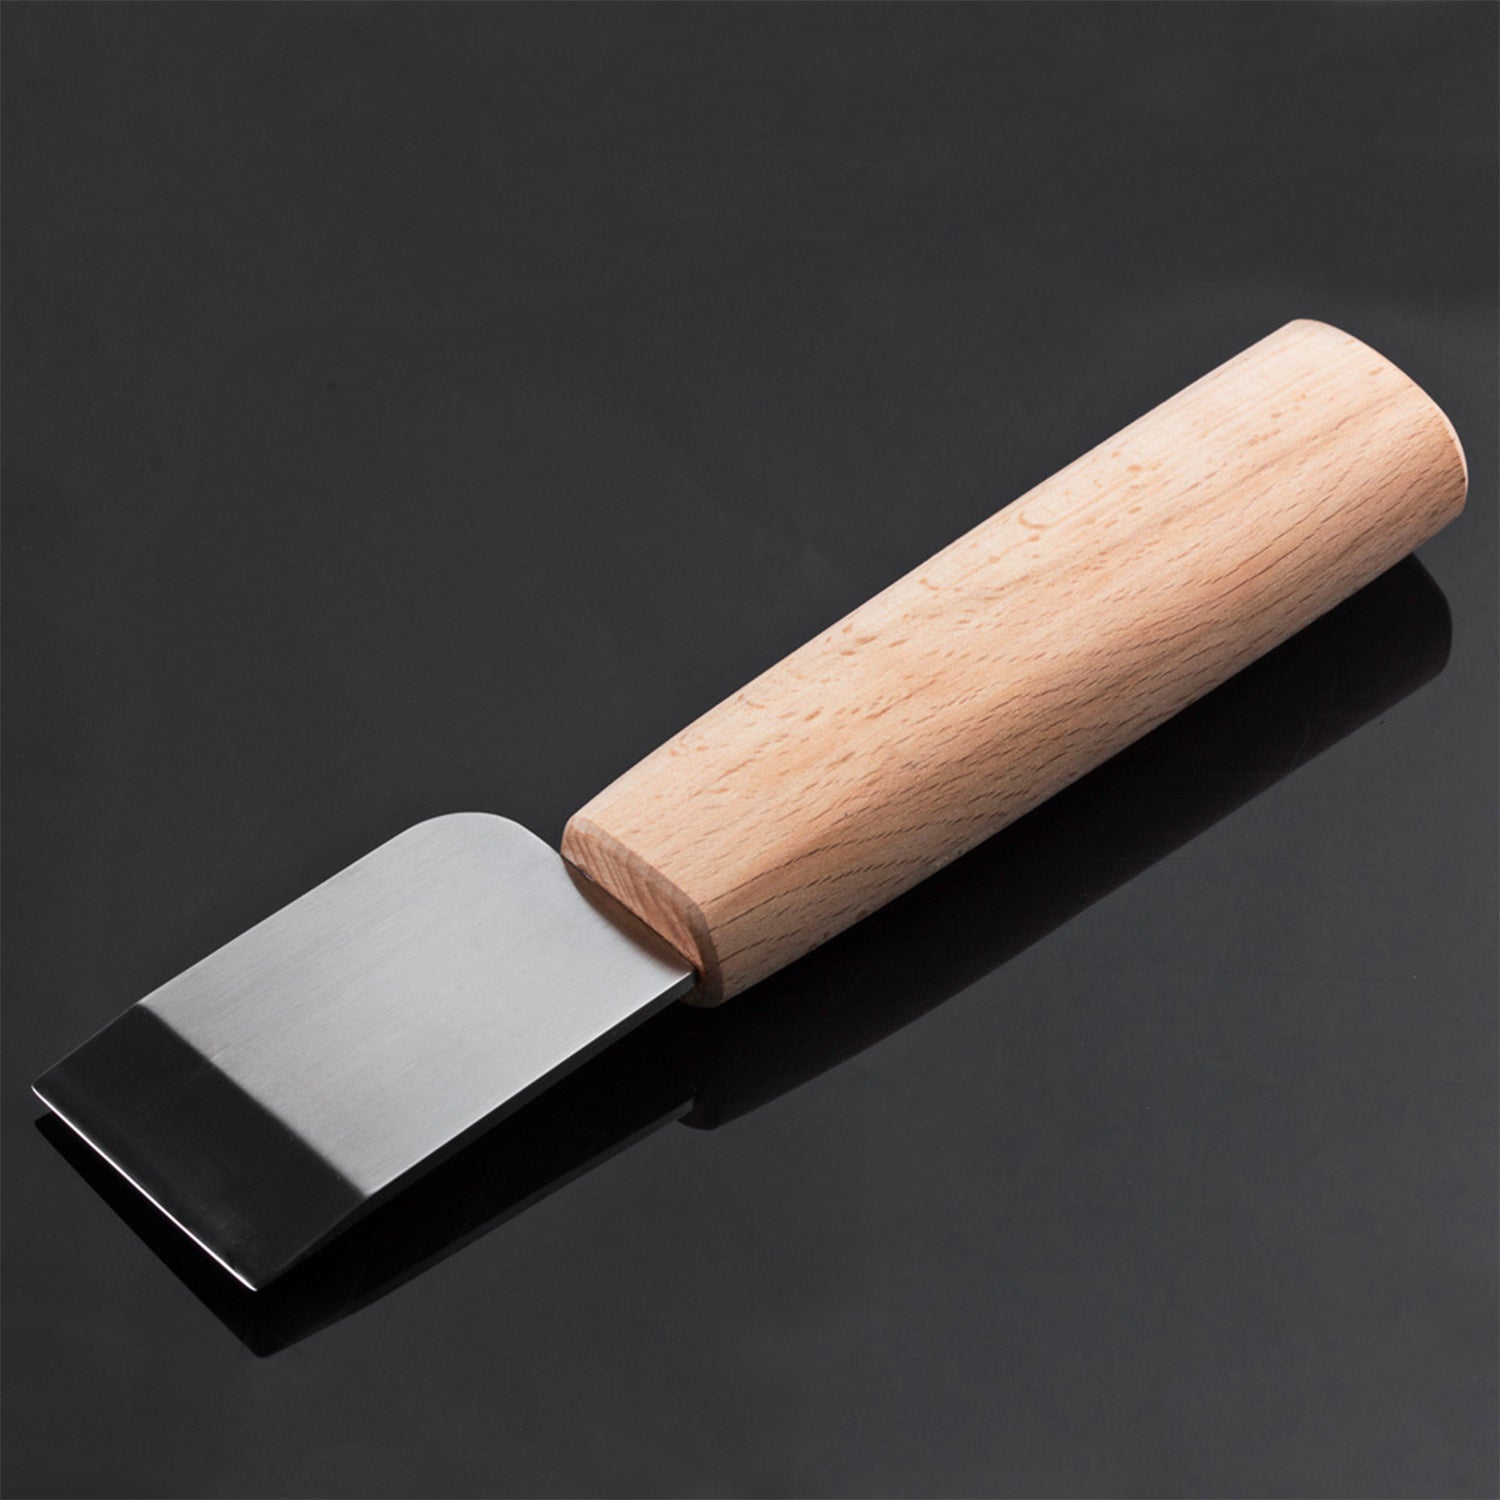 Homemade skiving knife : r/Leathercraft